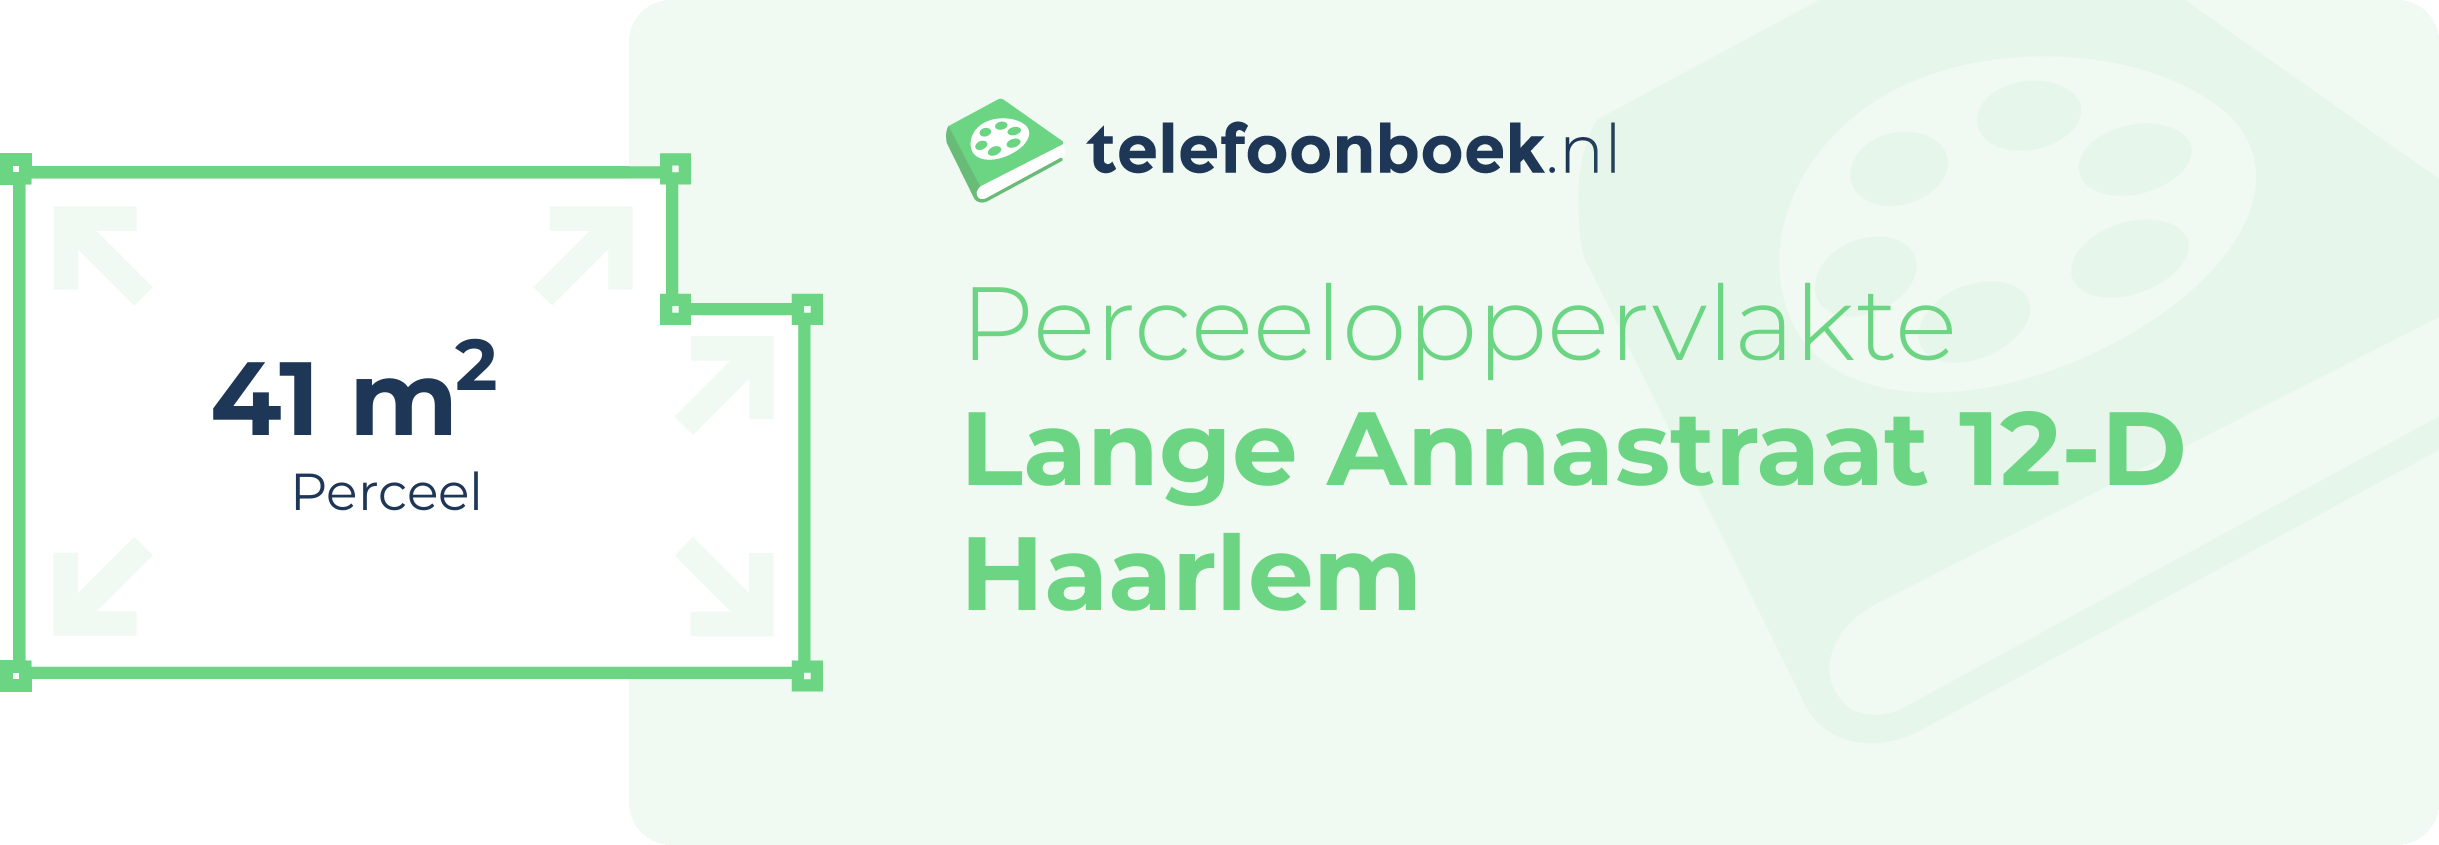 Perceeloppervlakte Lange Annastraat 12-D Haarlem